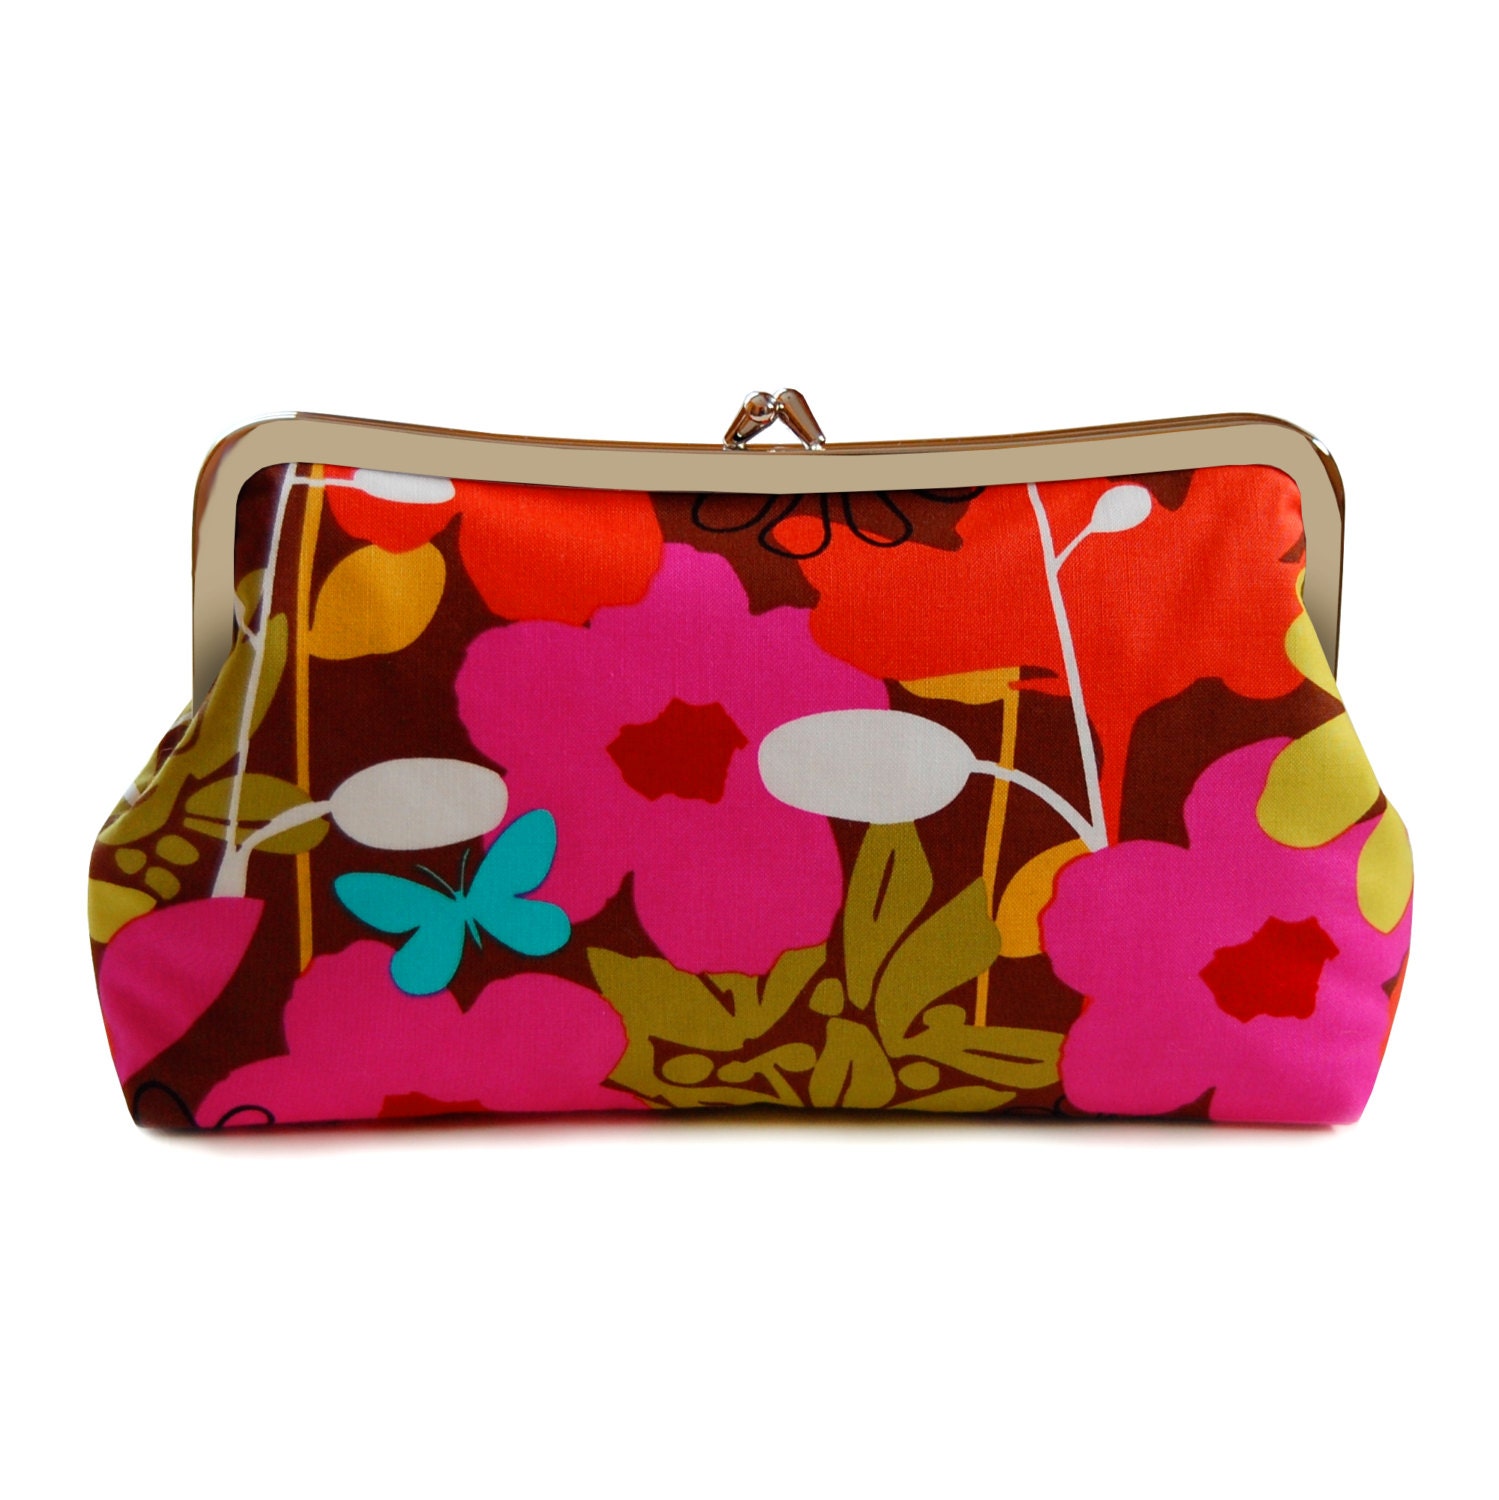 Colorful clutch purse, Floral clutch, Fabric clutch, Colorful Spring ...